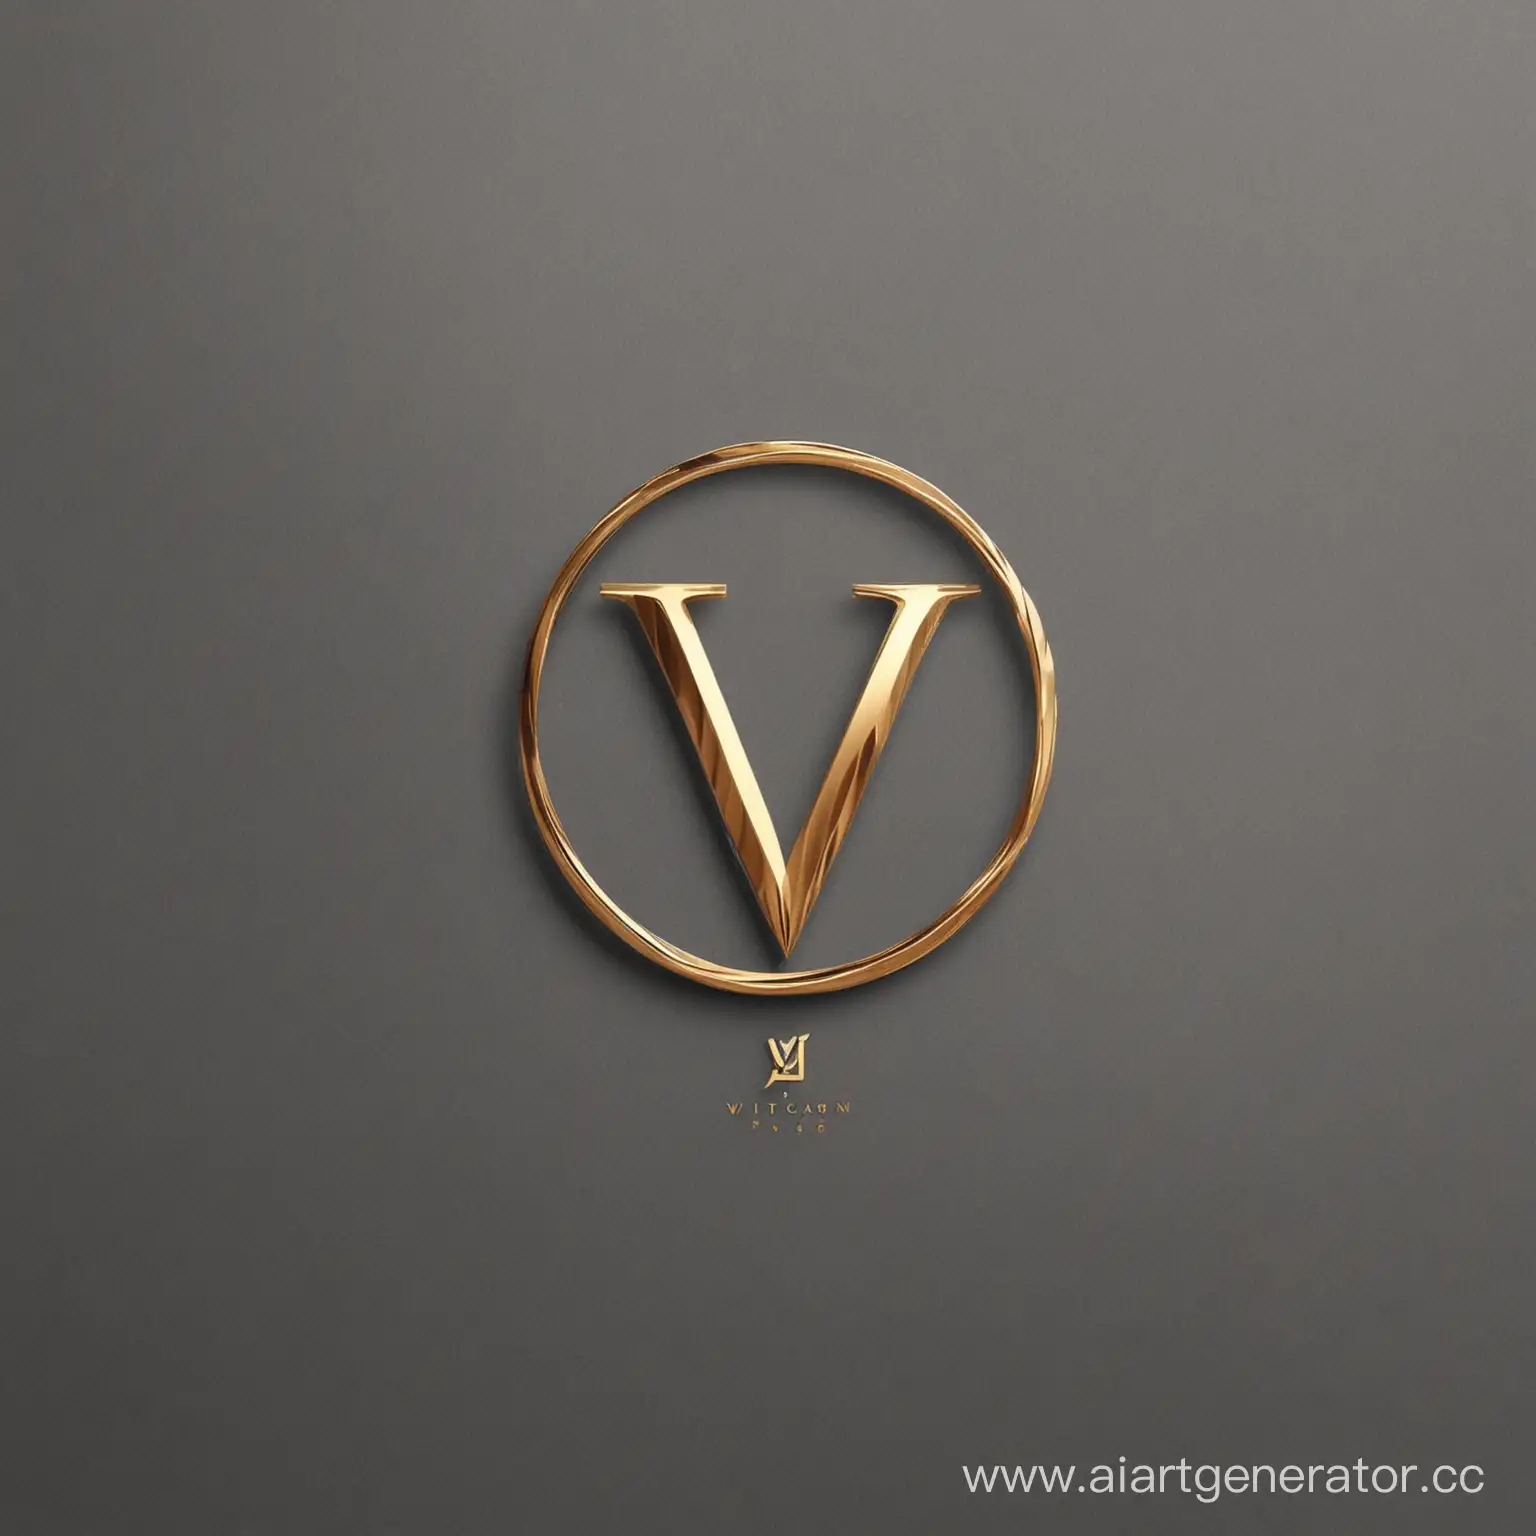 Придумай логотип дорогого бренда VITCOIN. В стиле минимализм
